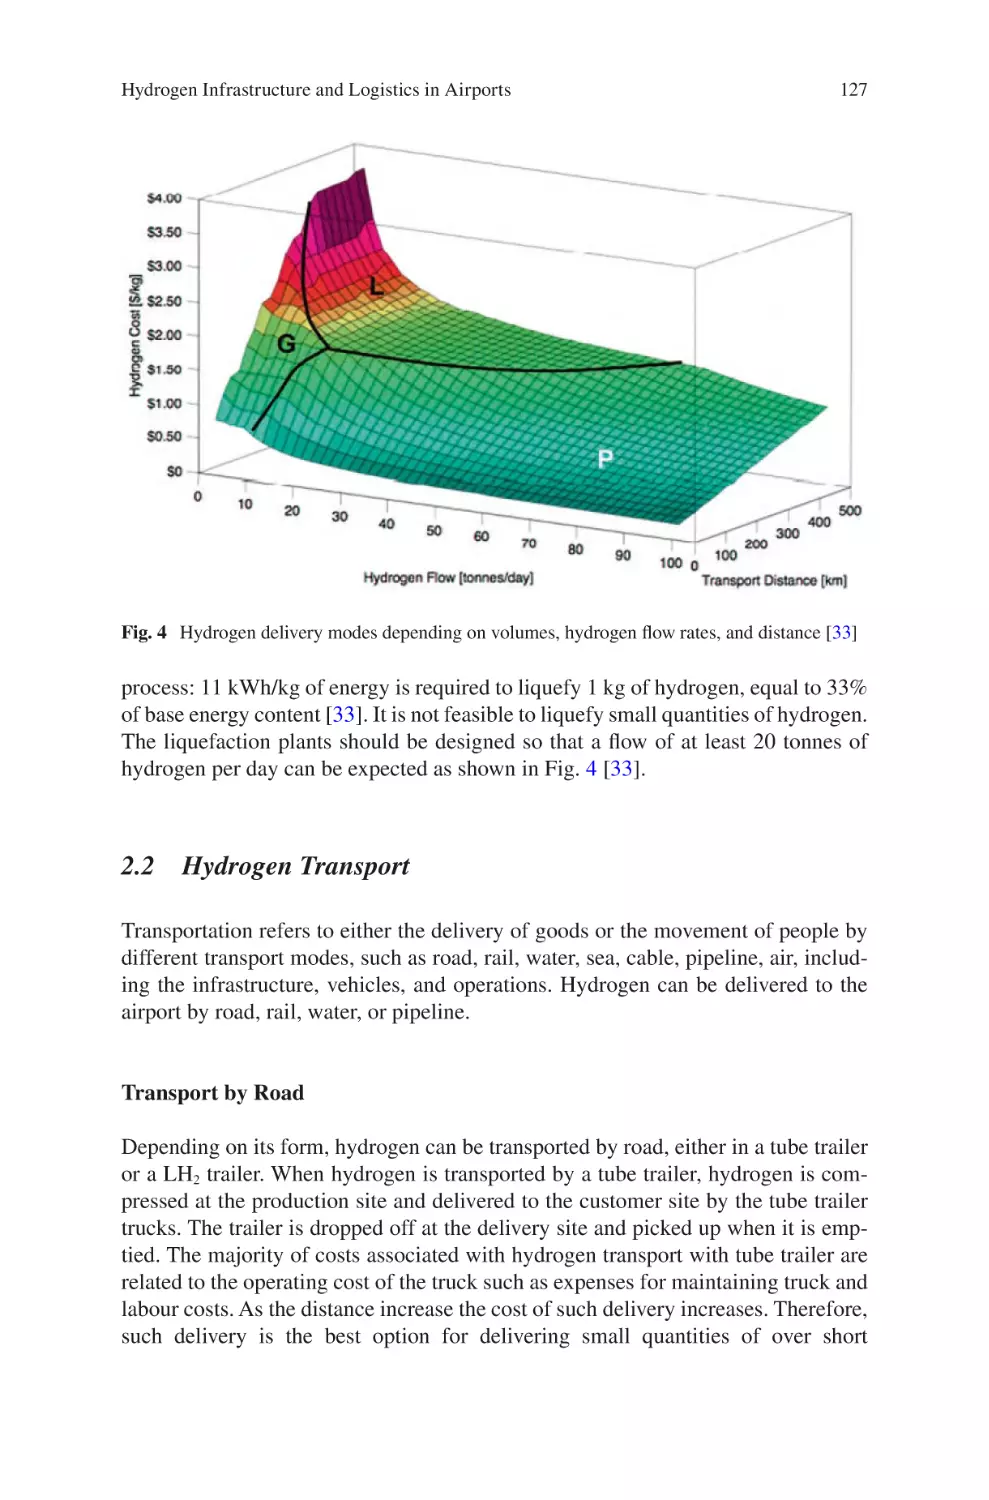 2.2 Hydrogen Transport
Transport by Road